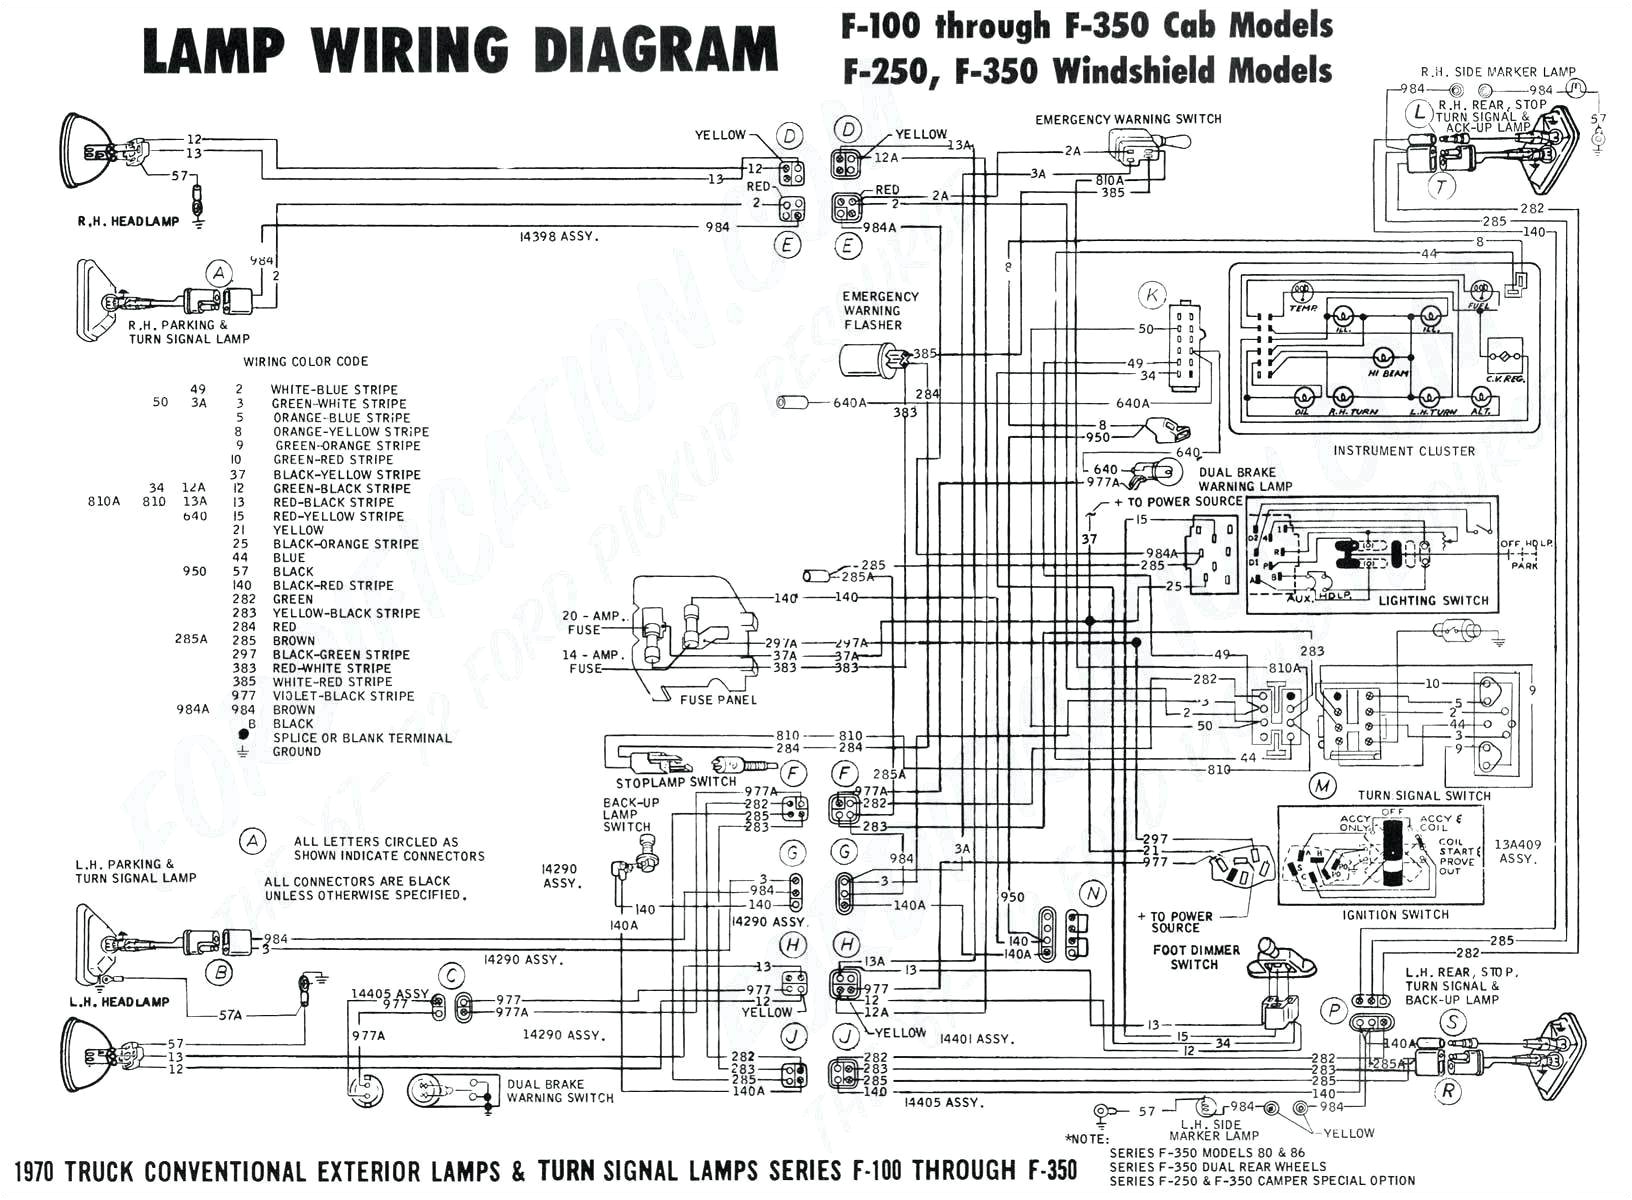 chevy kes diagram wiring diagram structure wiring diagram for kecc562gbl4 chevy kes diagram wiring diagram schematic